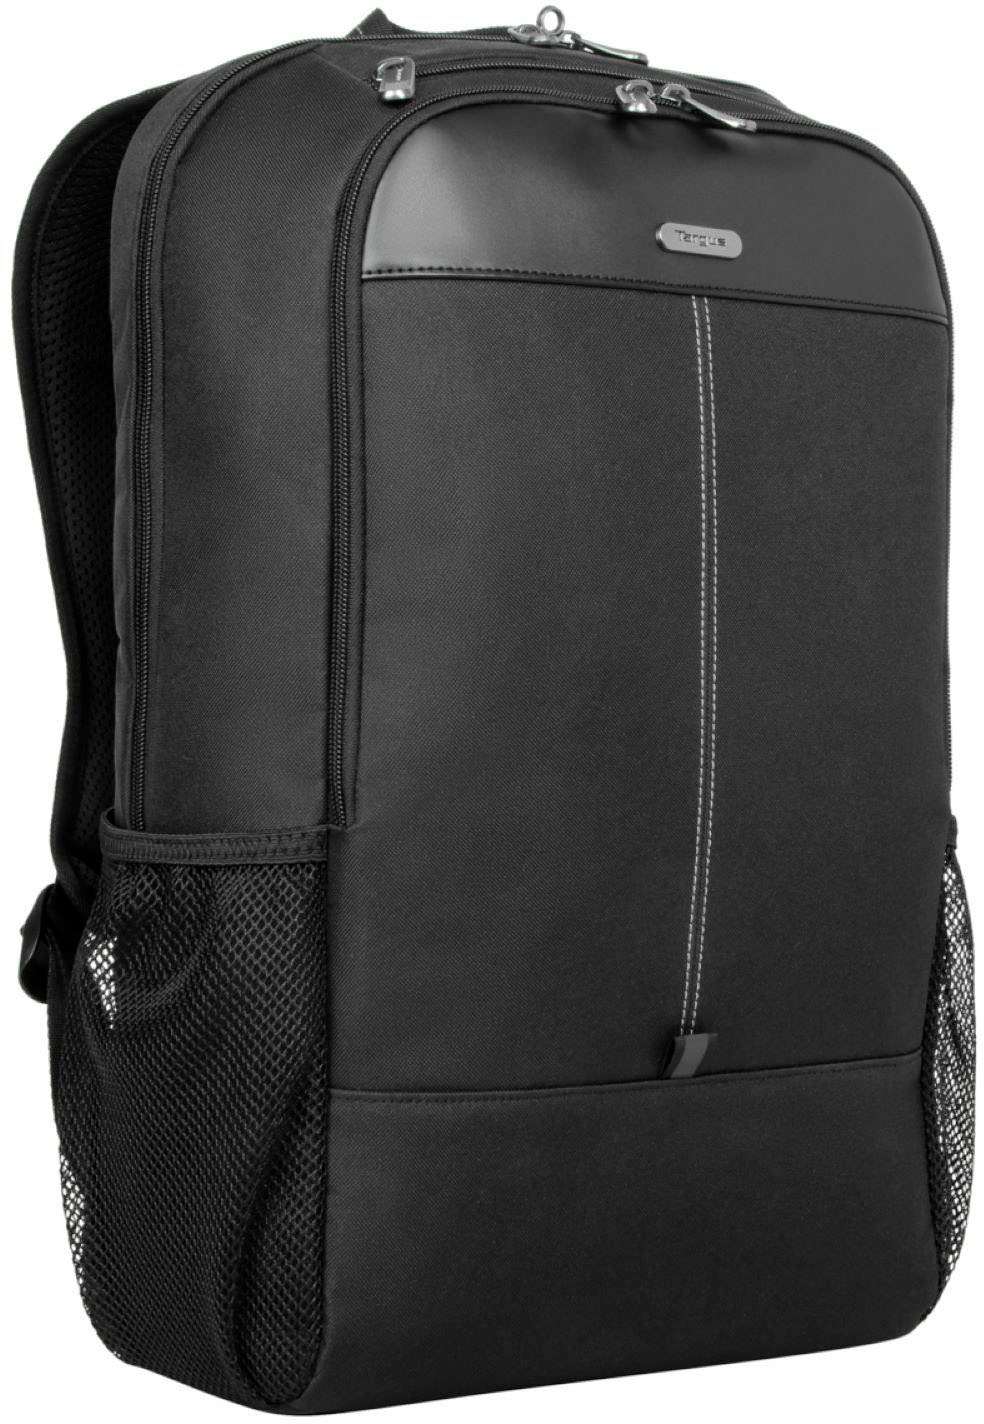 Left View: Samsonite - Mobile Solution Convertible Backpack for 15.6" Laptop - Navy Blue